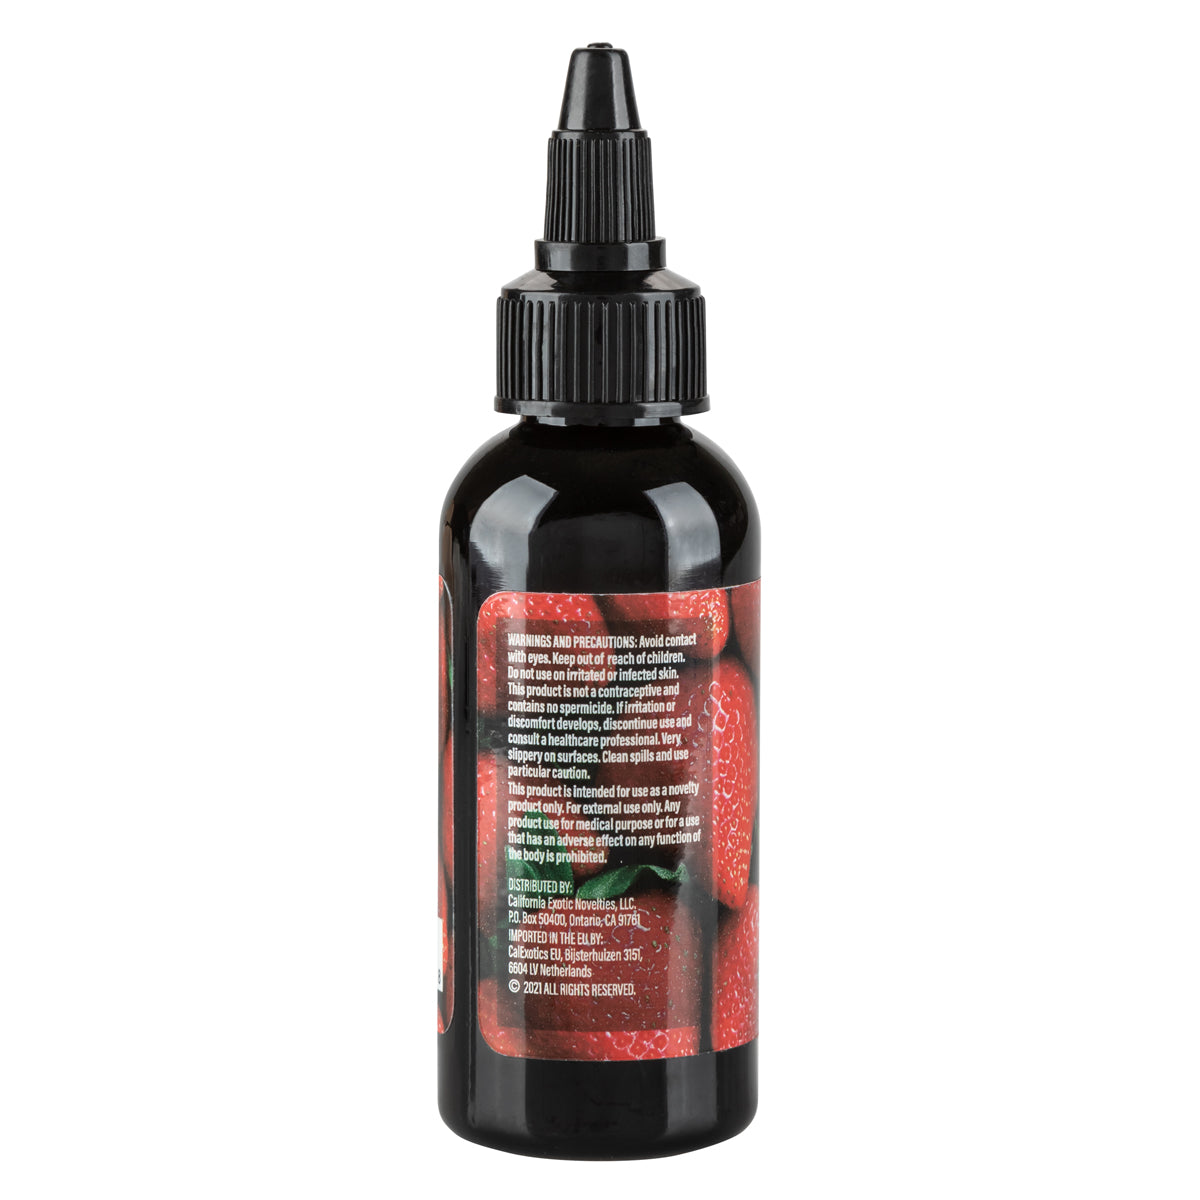 CalExotics – Fuck Sauce – Water-Based Lubricant – Strawberry - 2oz/60ml